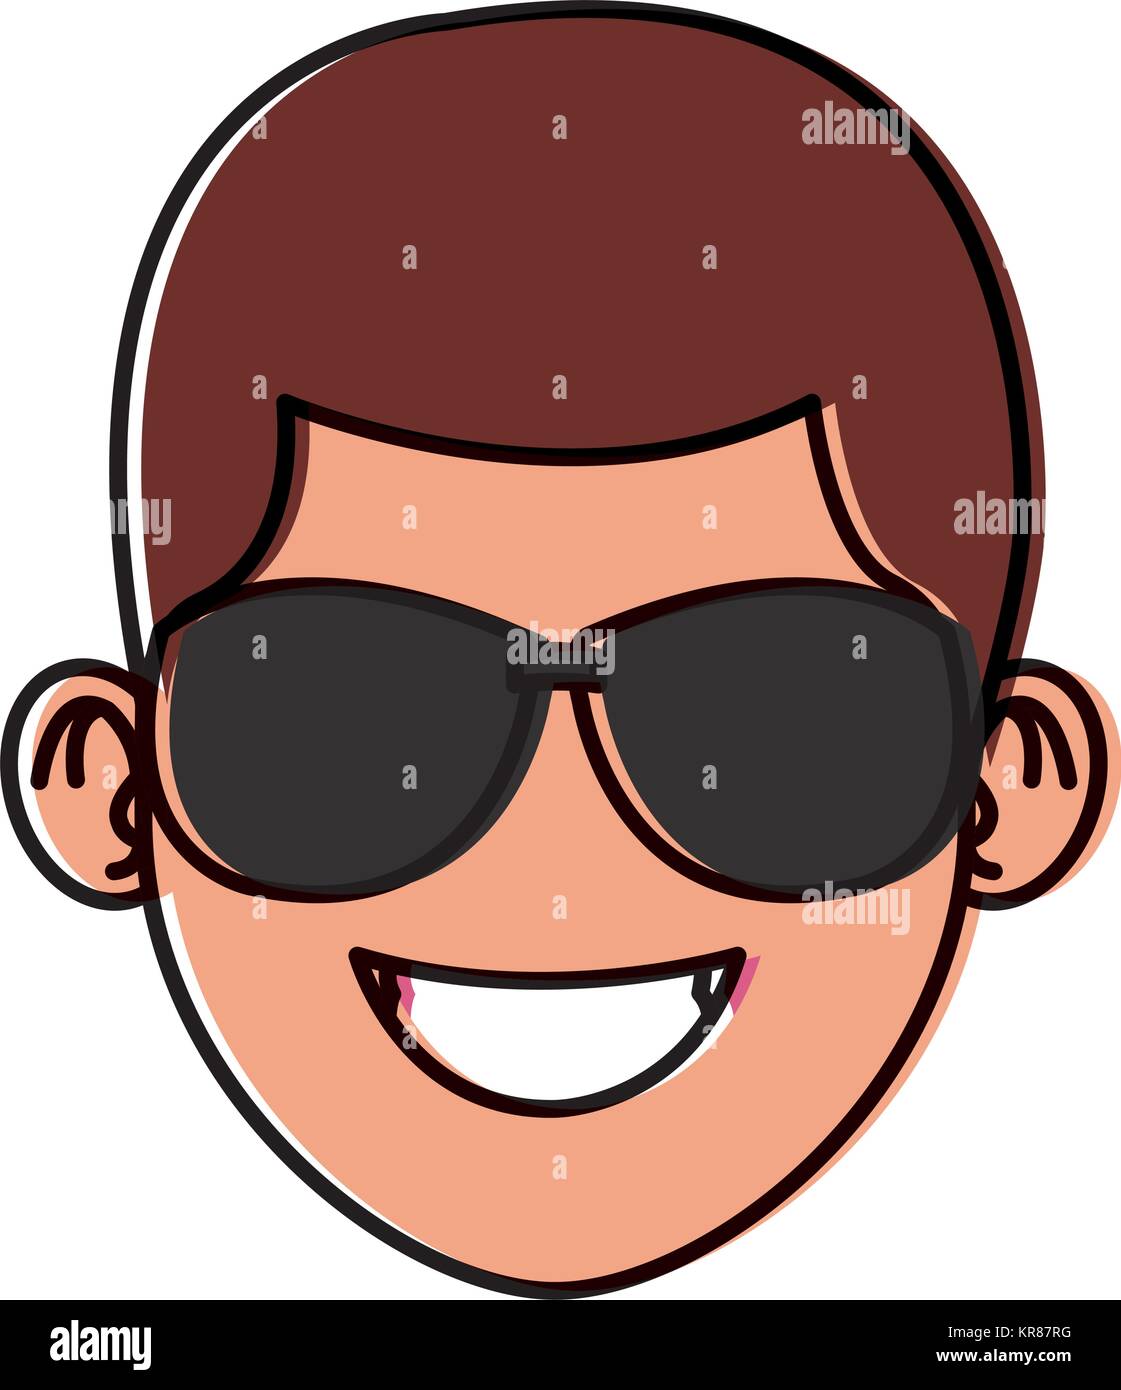 Man with sunglasses face icon vector illustration graphic design Stock Vector